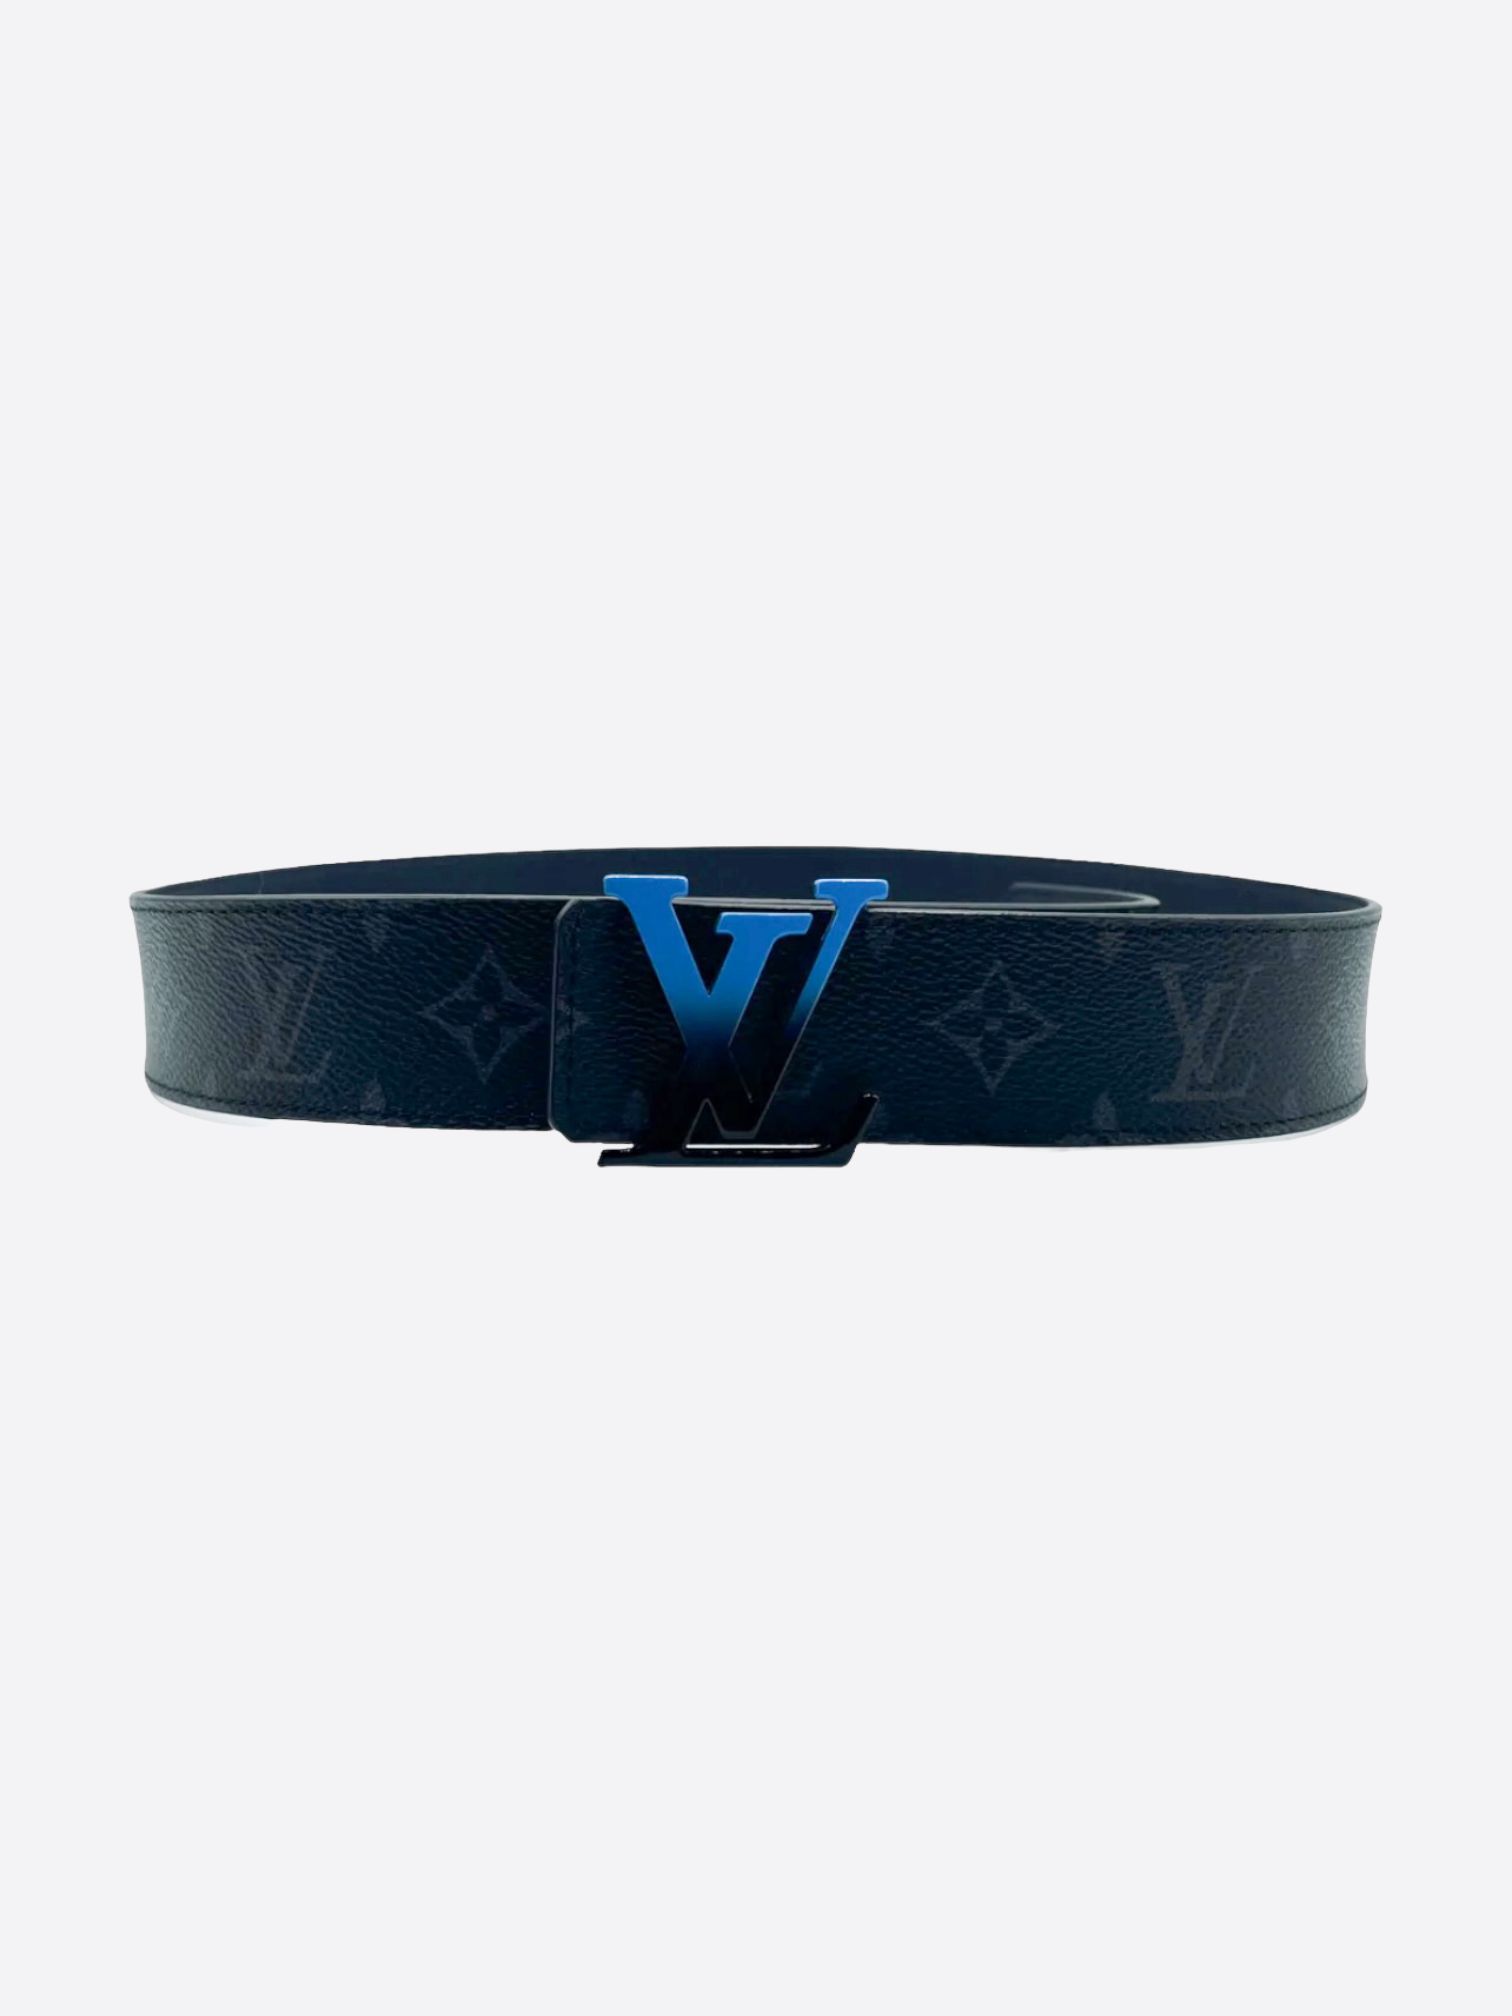 Louis Vuitton Sunset monogram canvas reversible belt - Good or Bag